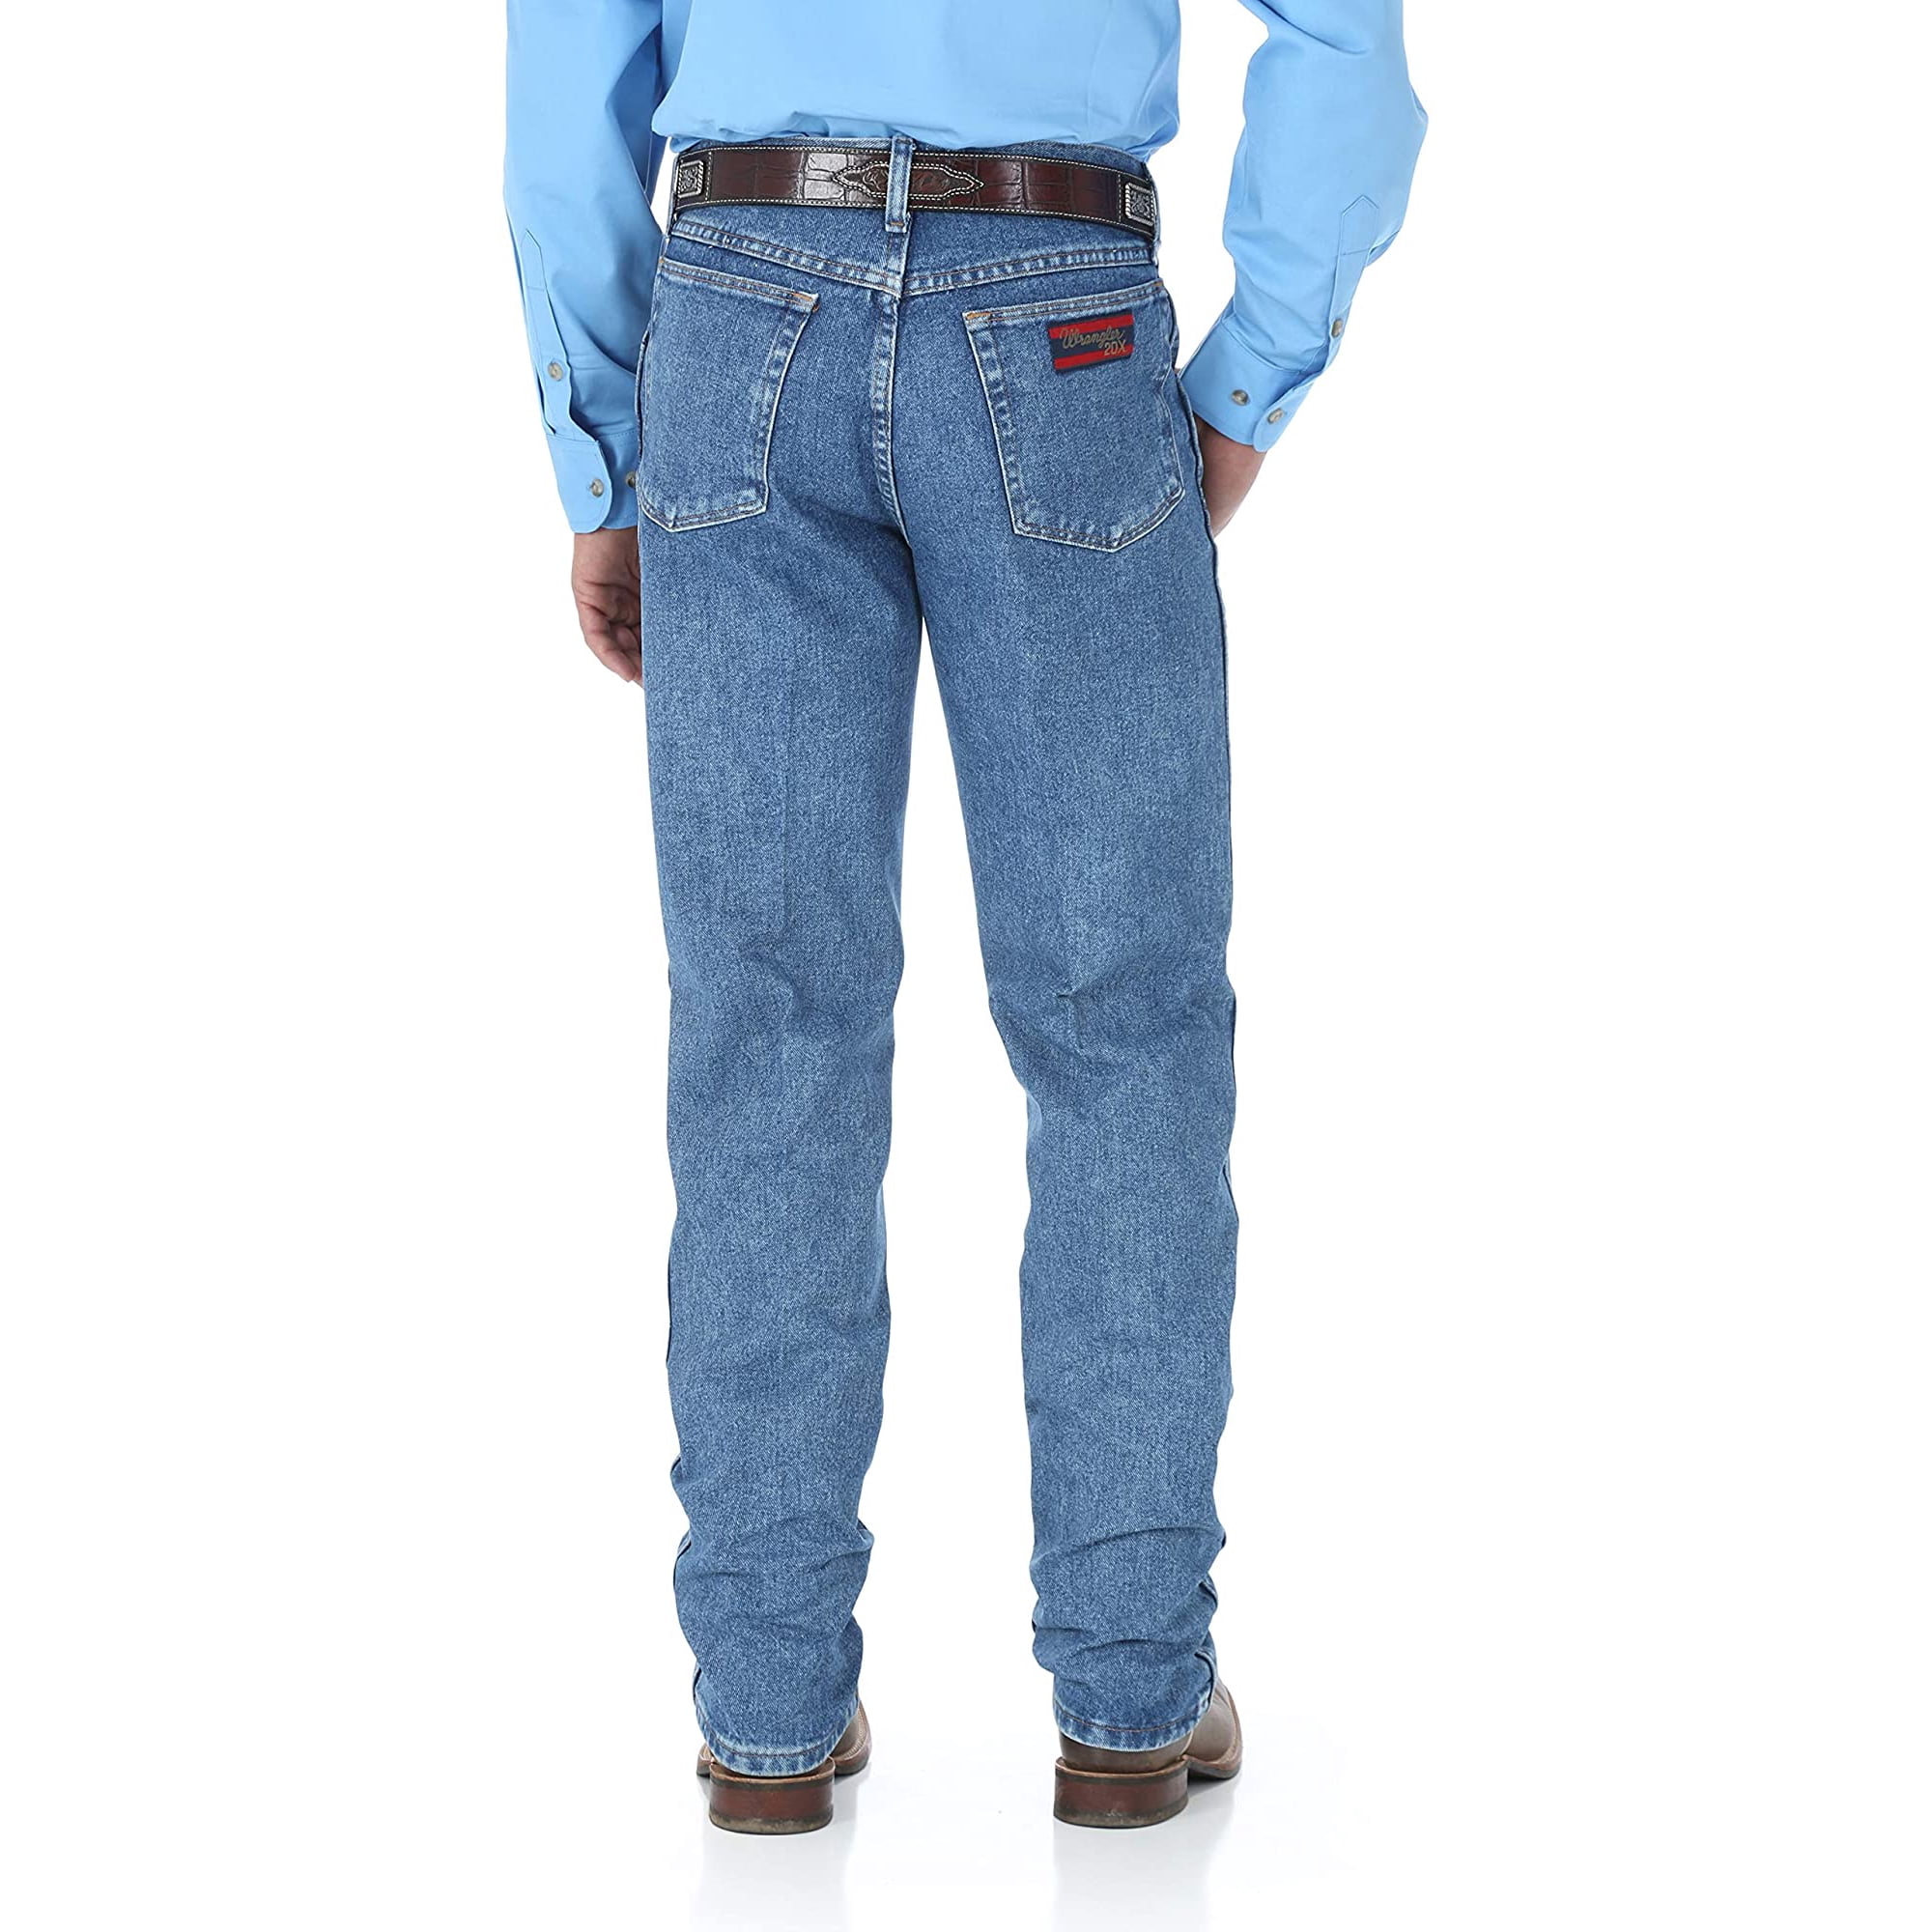 Wrangler Men's 20x Original Fit Jean,Vintage Stonewash,42x34 | Walmart  Canada